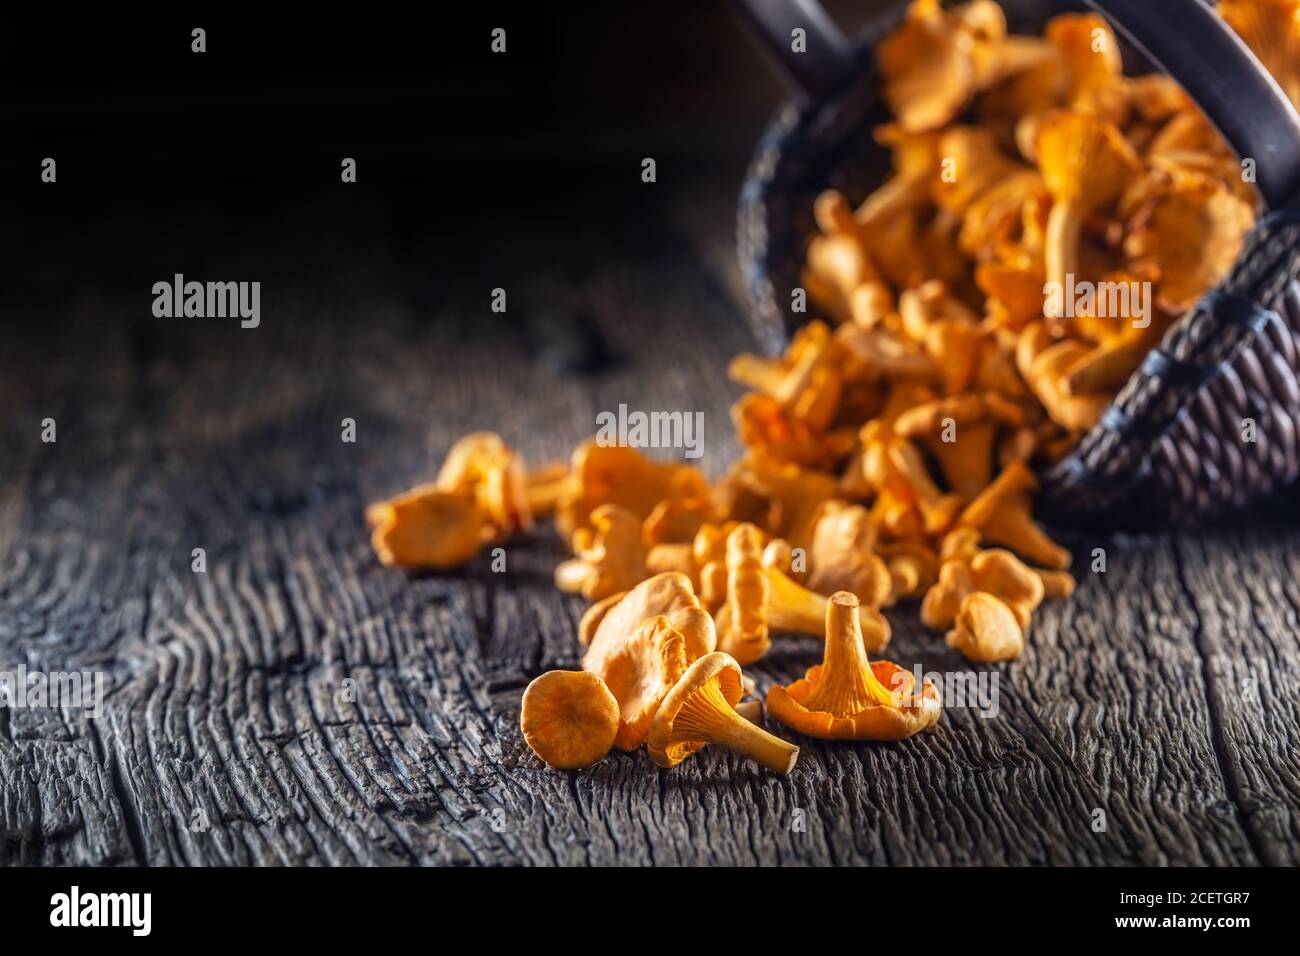 Rohe Pfifferlinge Pilz auf Holz aus dem hölzernen Weidenkorb verstreut Korb Stockfoto